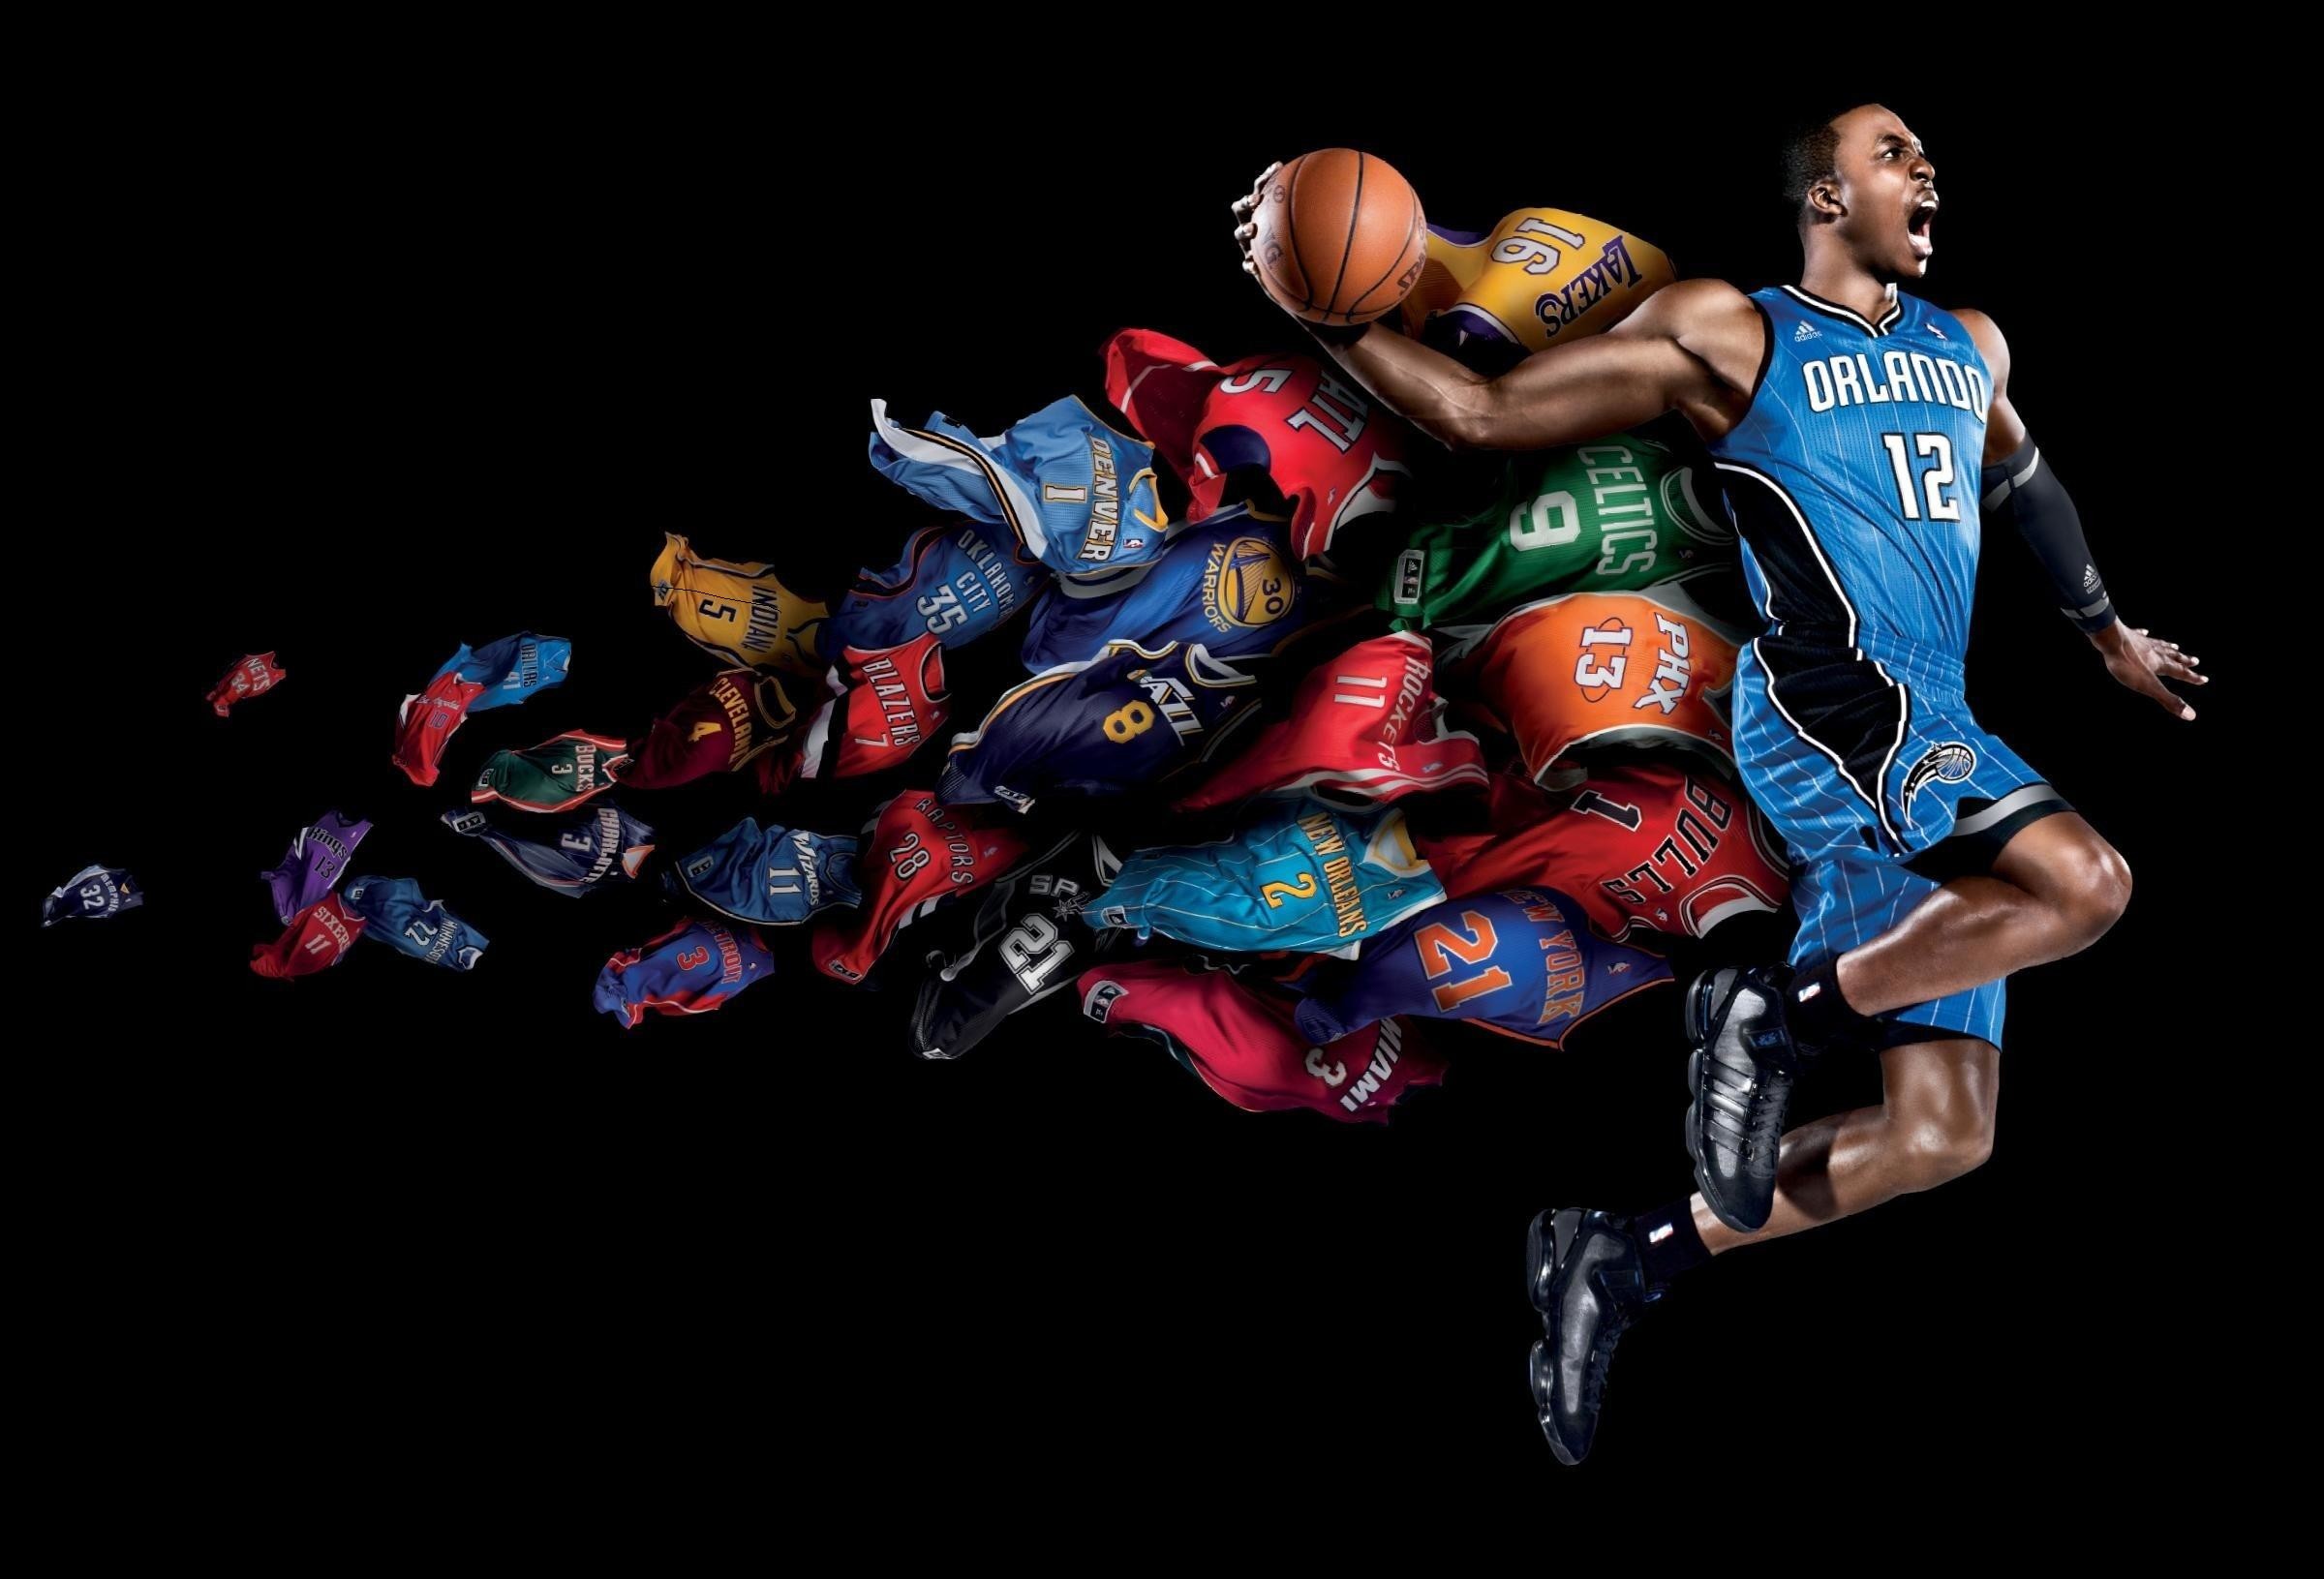 Basketball wallpapers basketball wallpapers 2015 basketball wallpapers